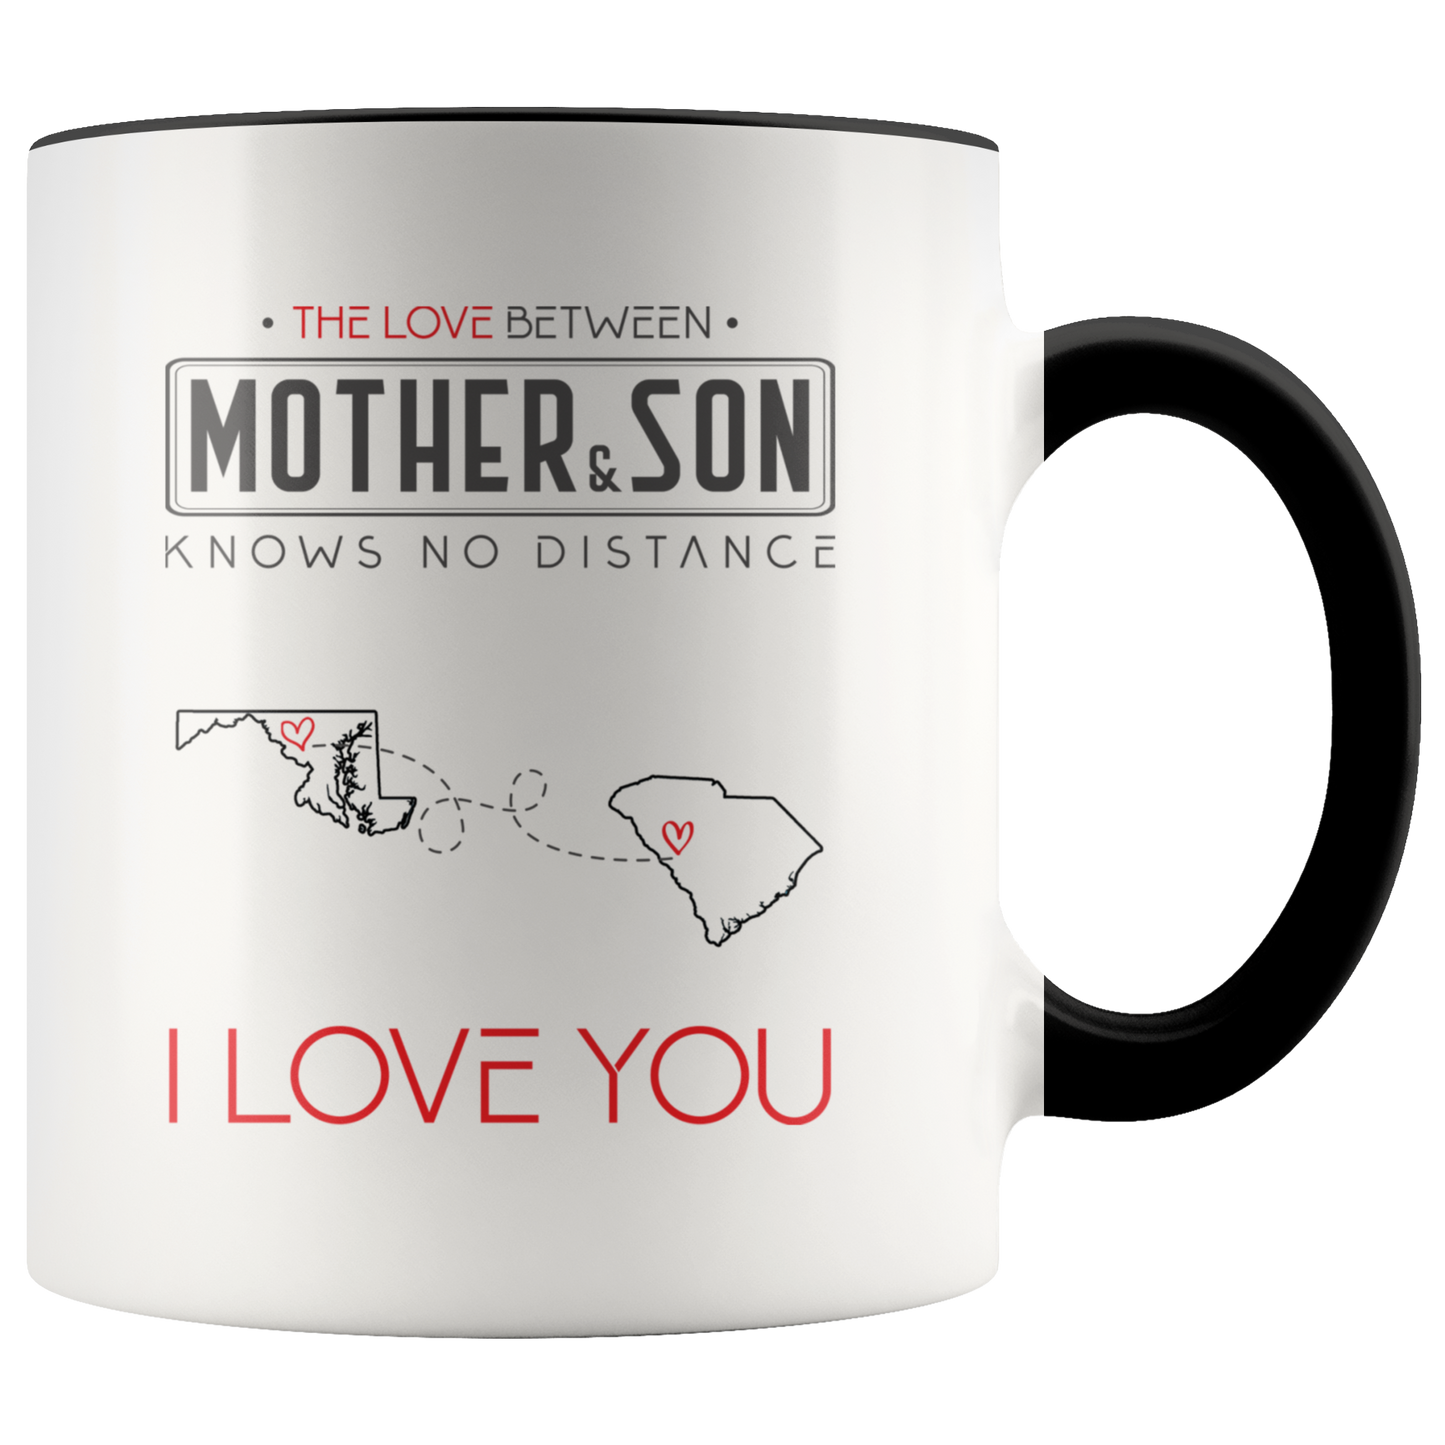 cust_80801_7749-sp-23938 - [ Maryland | South Carolina | Mother And Son ]Mother And Son Mug 11 oz - The Love Between Mother And Son K